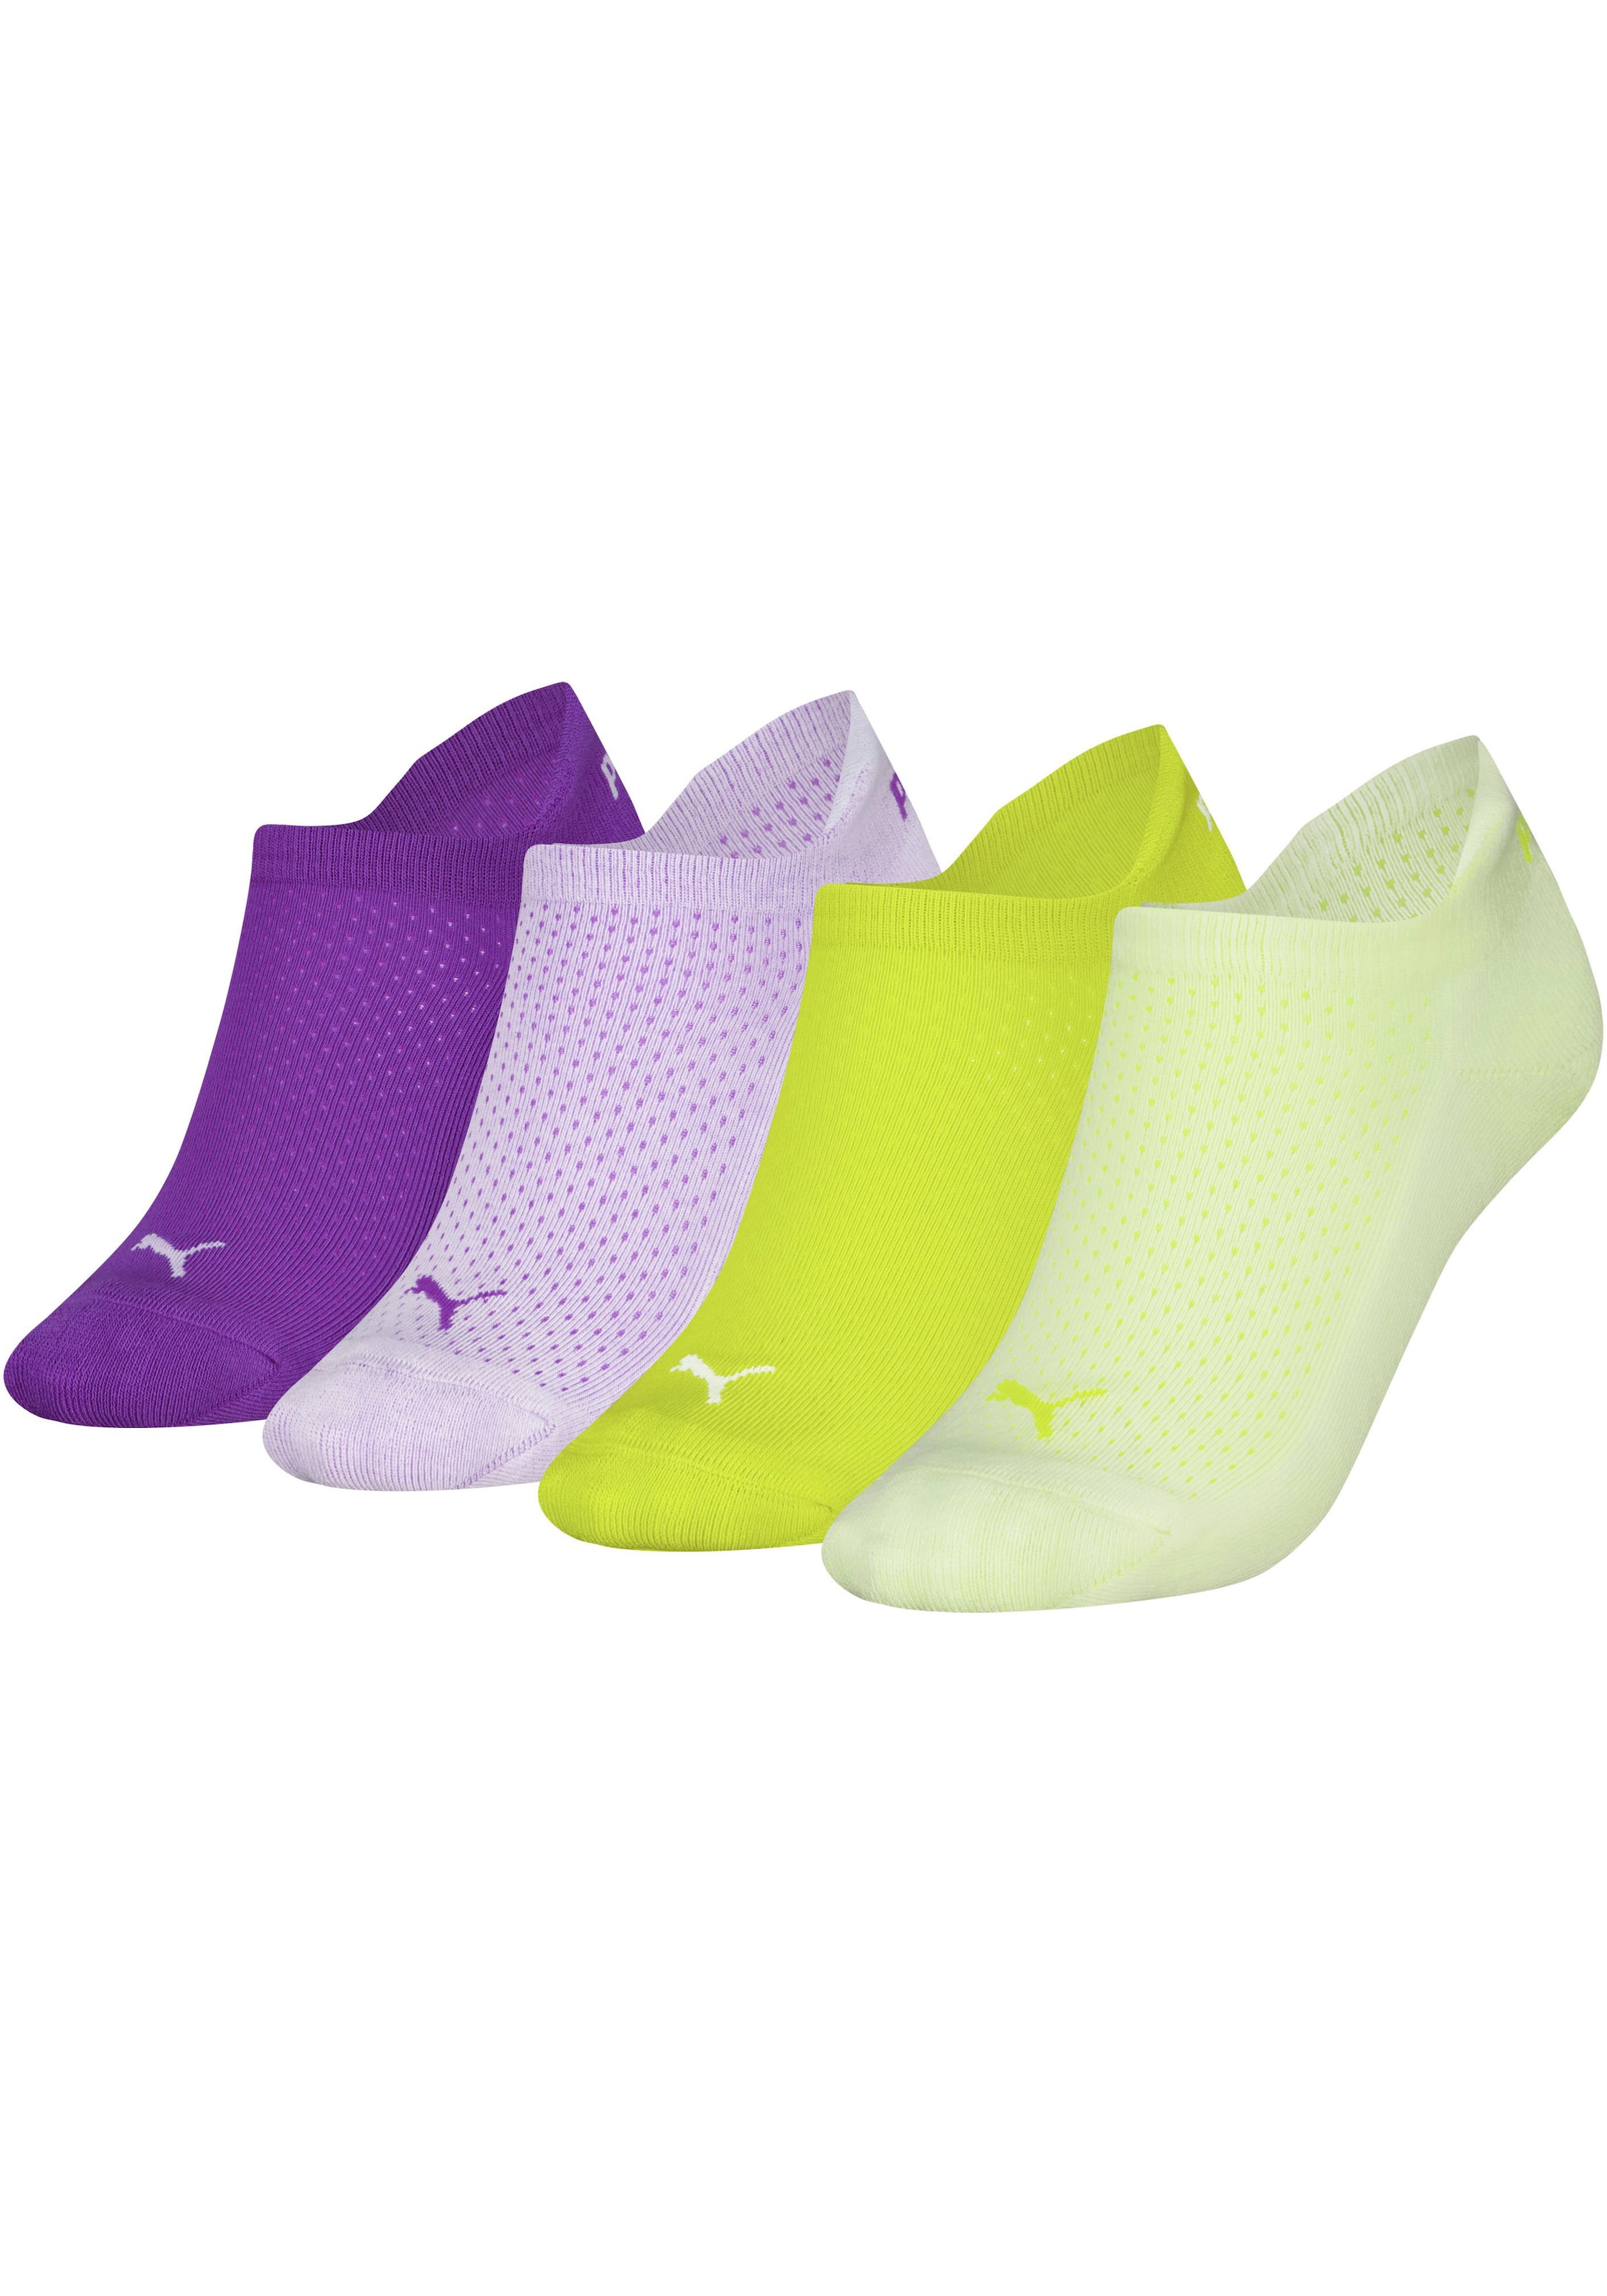 PUMA Sneakersocken, (4 Paar), in stylischen Sommerfarben